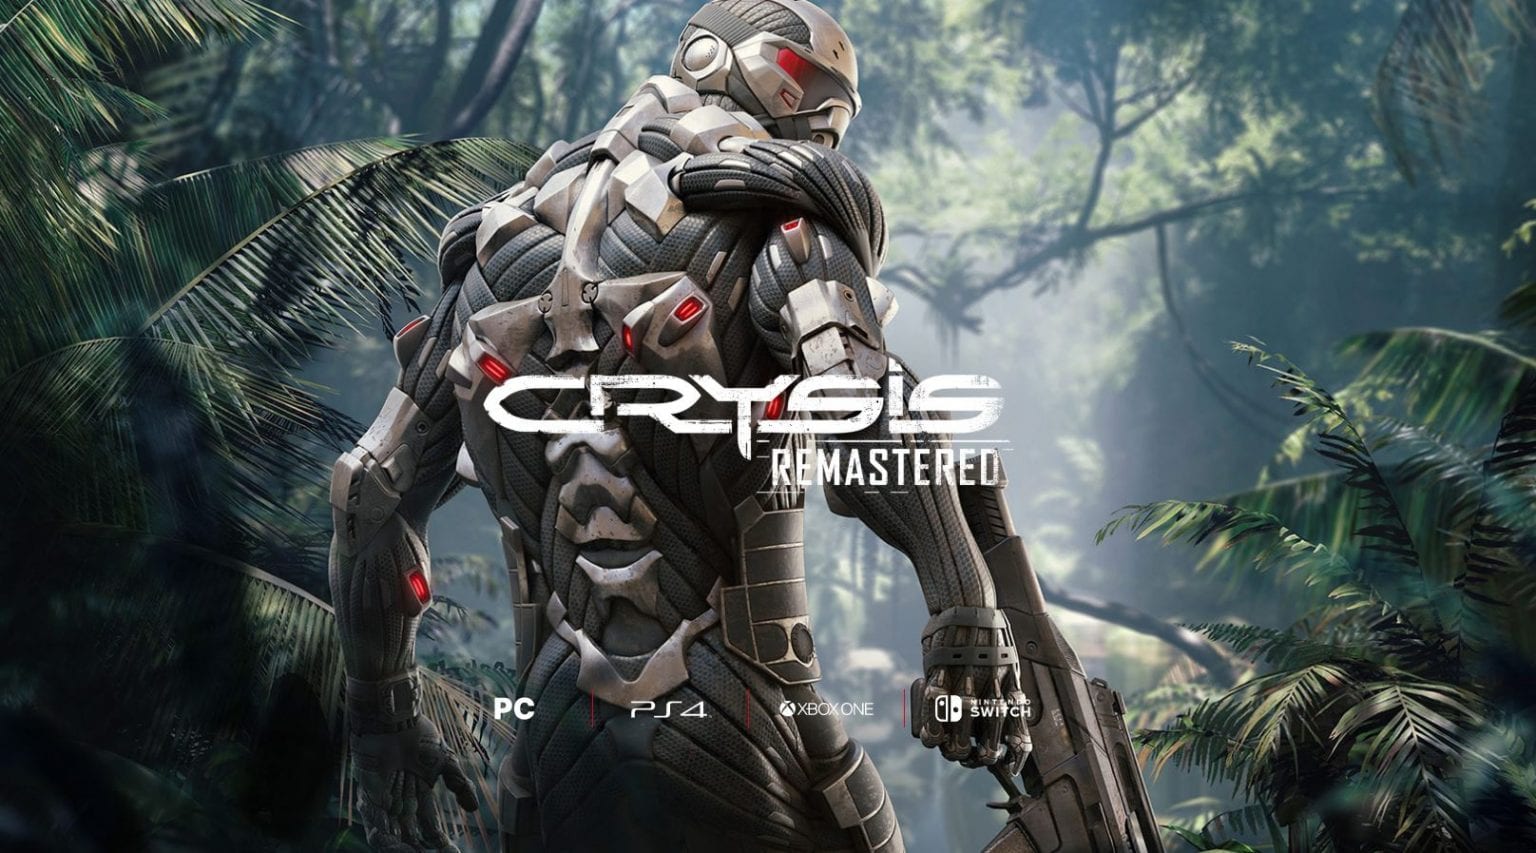 download free crysis 3 remastered pc